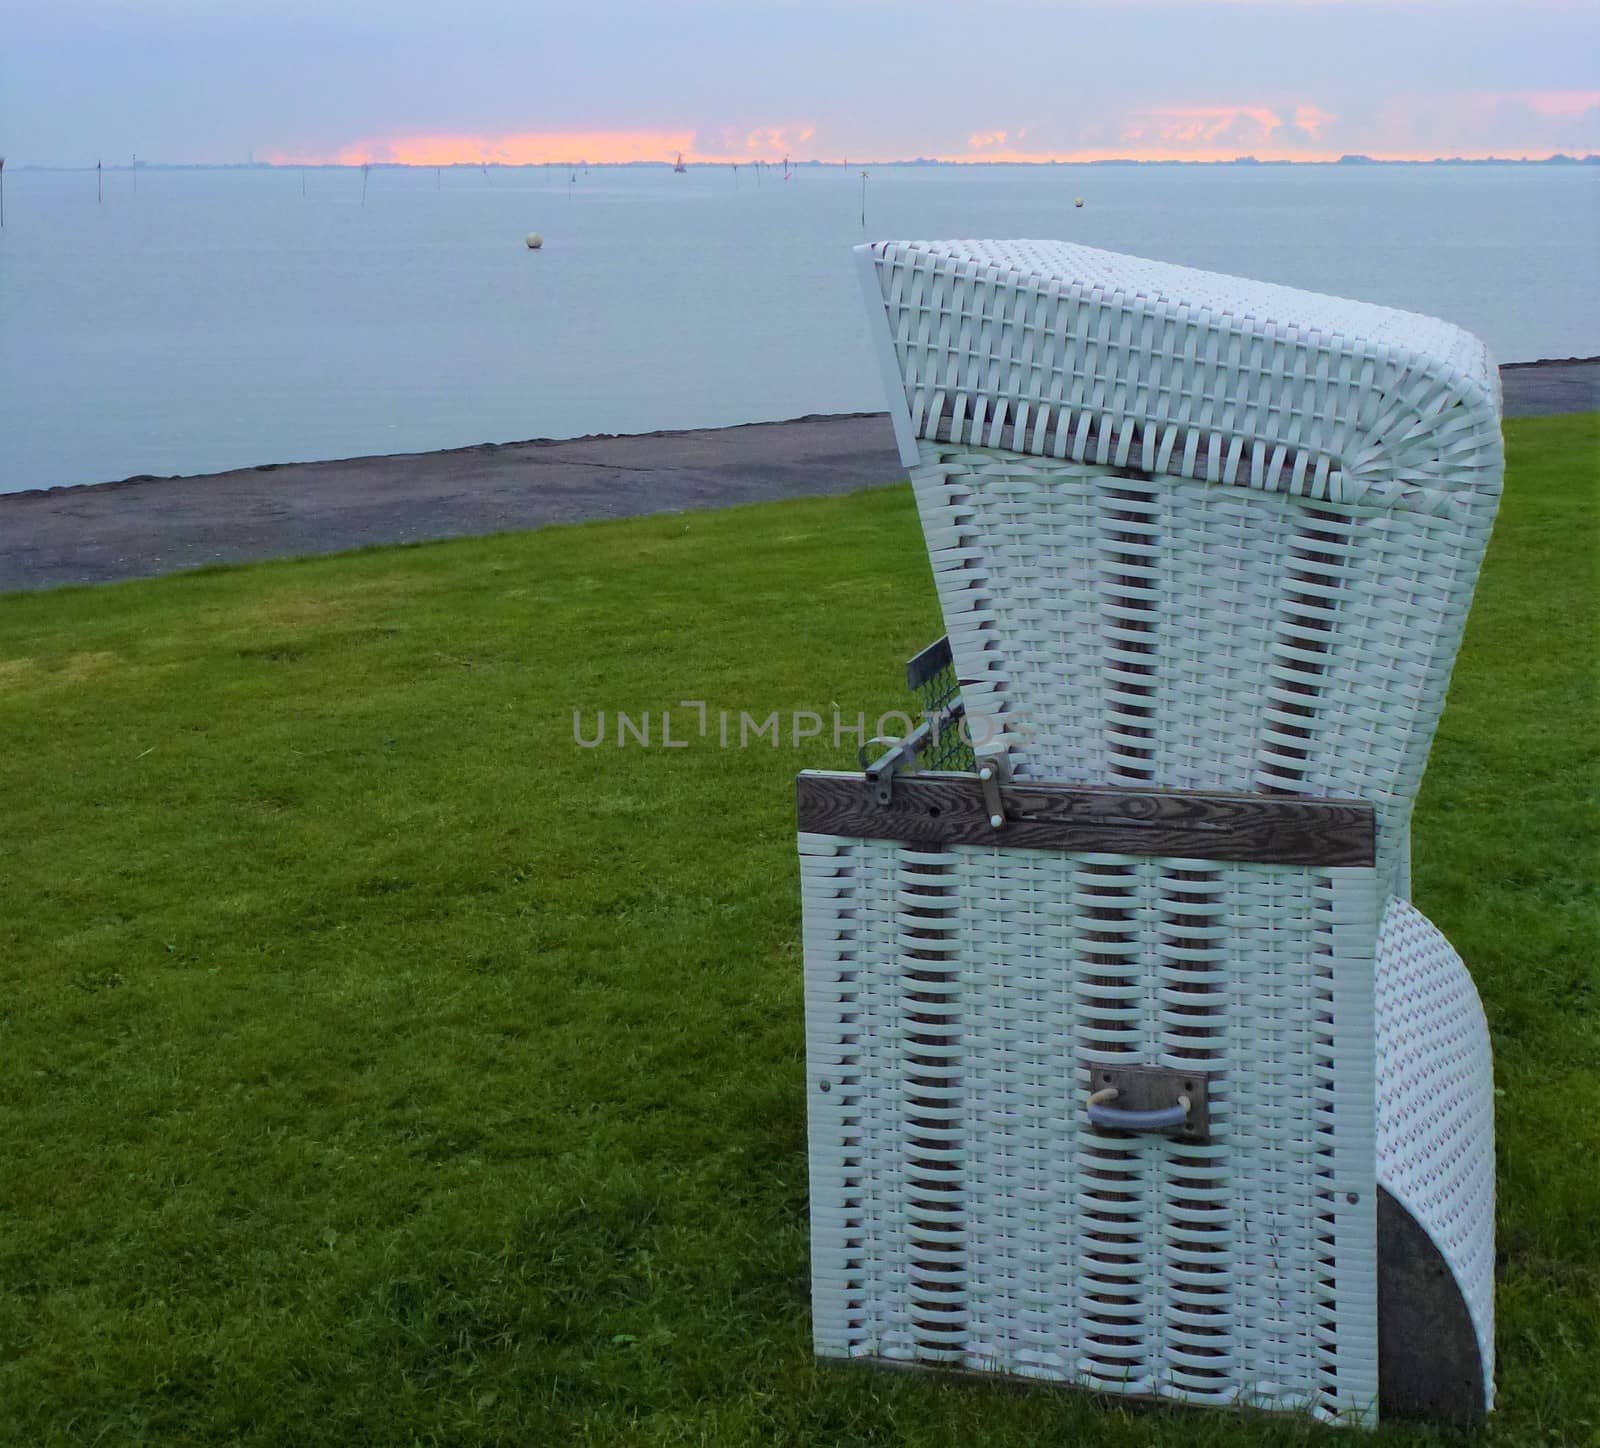 A single beach chair on the green meadow